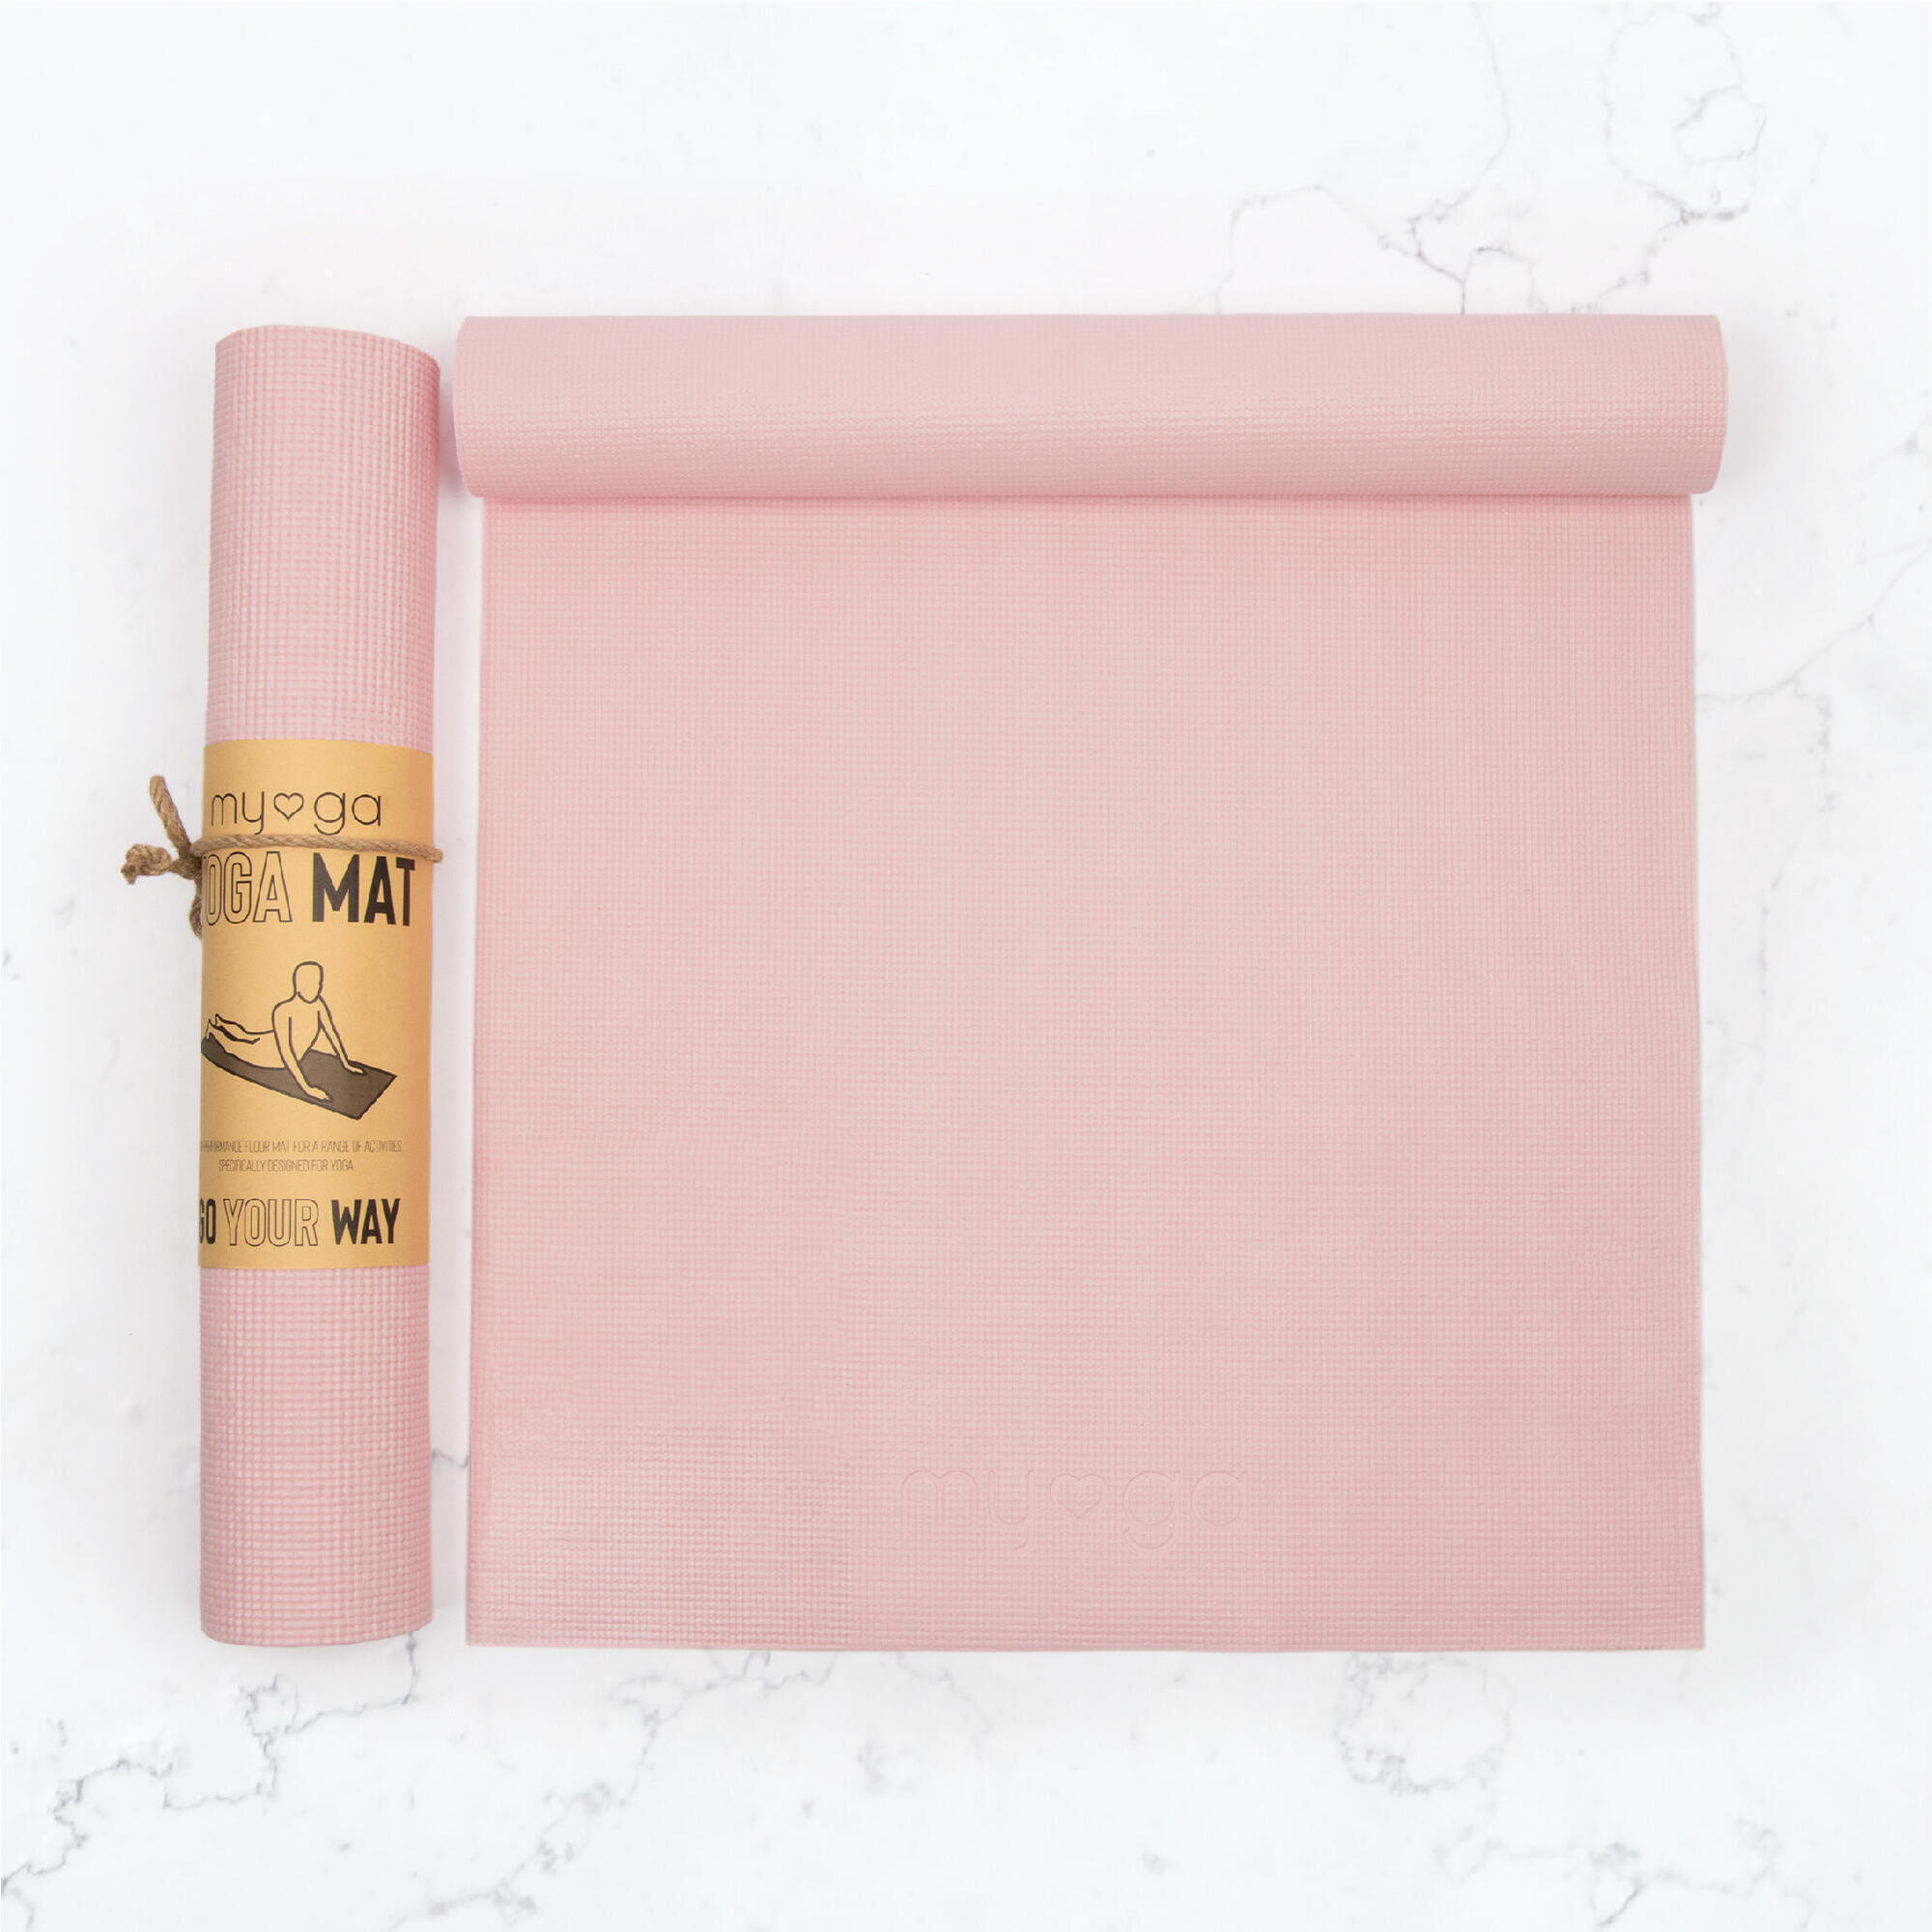 Myga Entry Level Yoga Mat - Dusty Pink 1/8